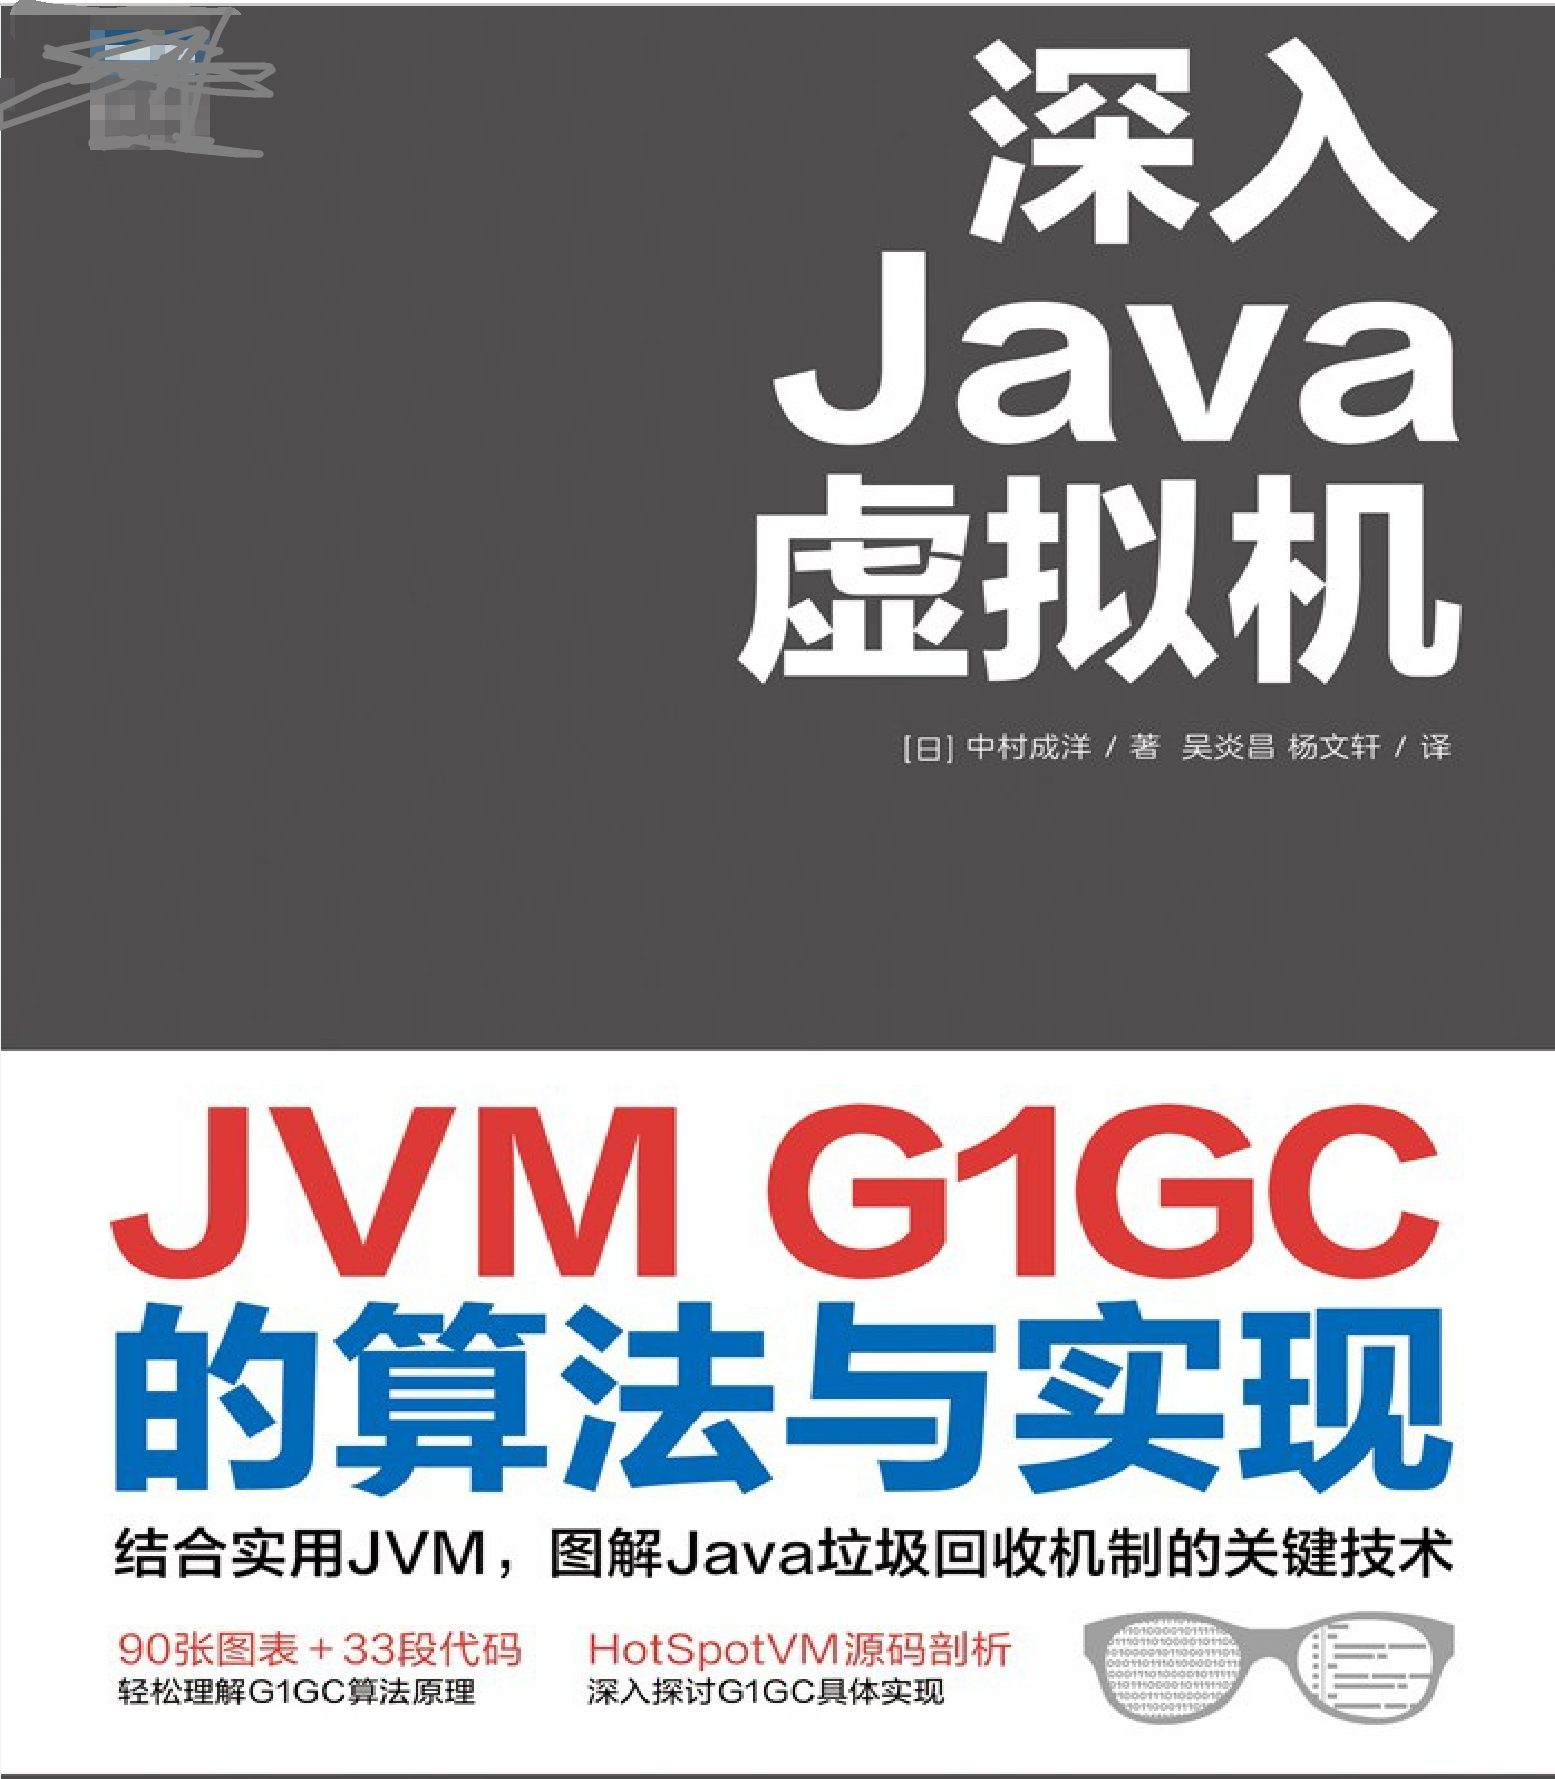 GitHub惊现！全网首份开源的深入理解JVMG1GC的算法与实现手册